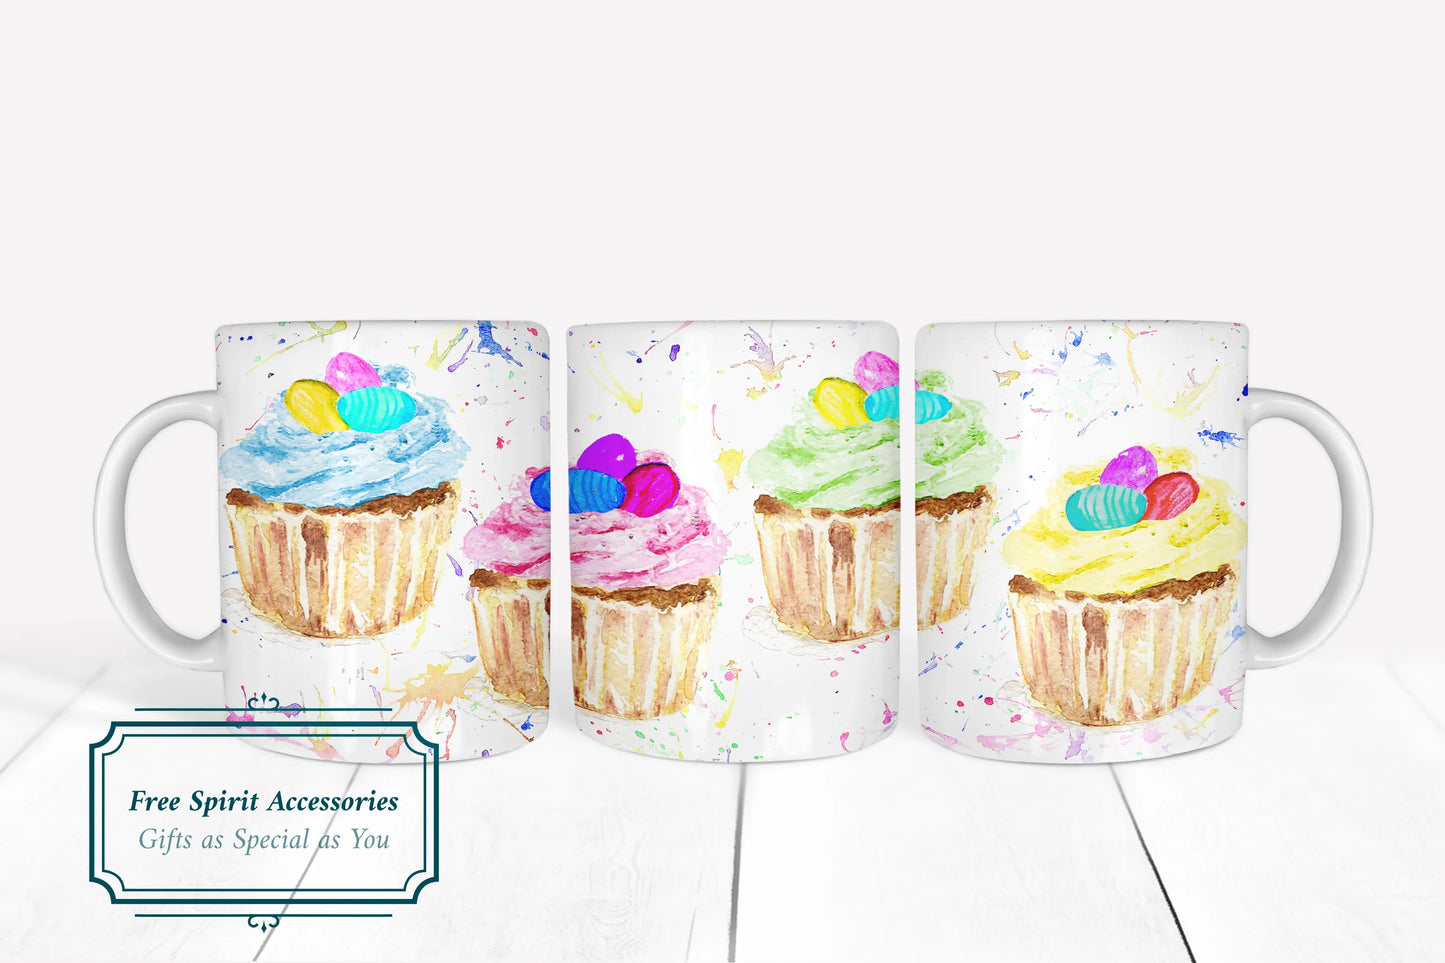  Beautiful Cup Cakes Mug by Free Spirit Accessories sold by Free Spirit Accessories